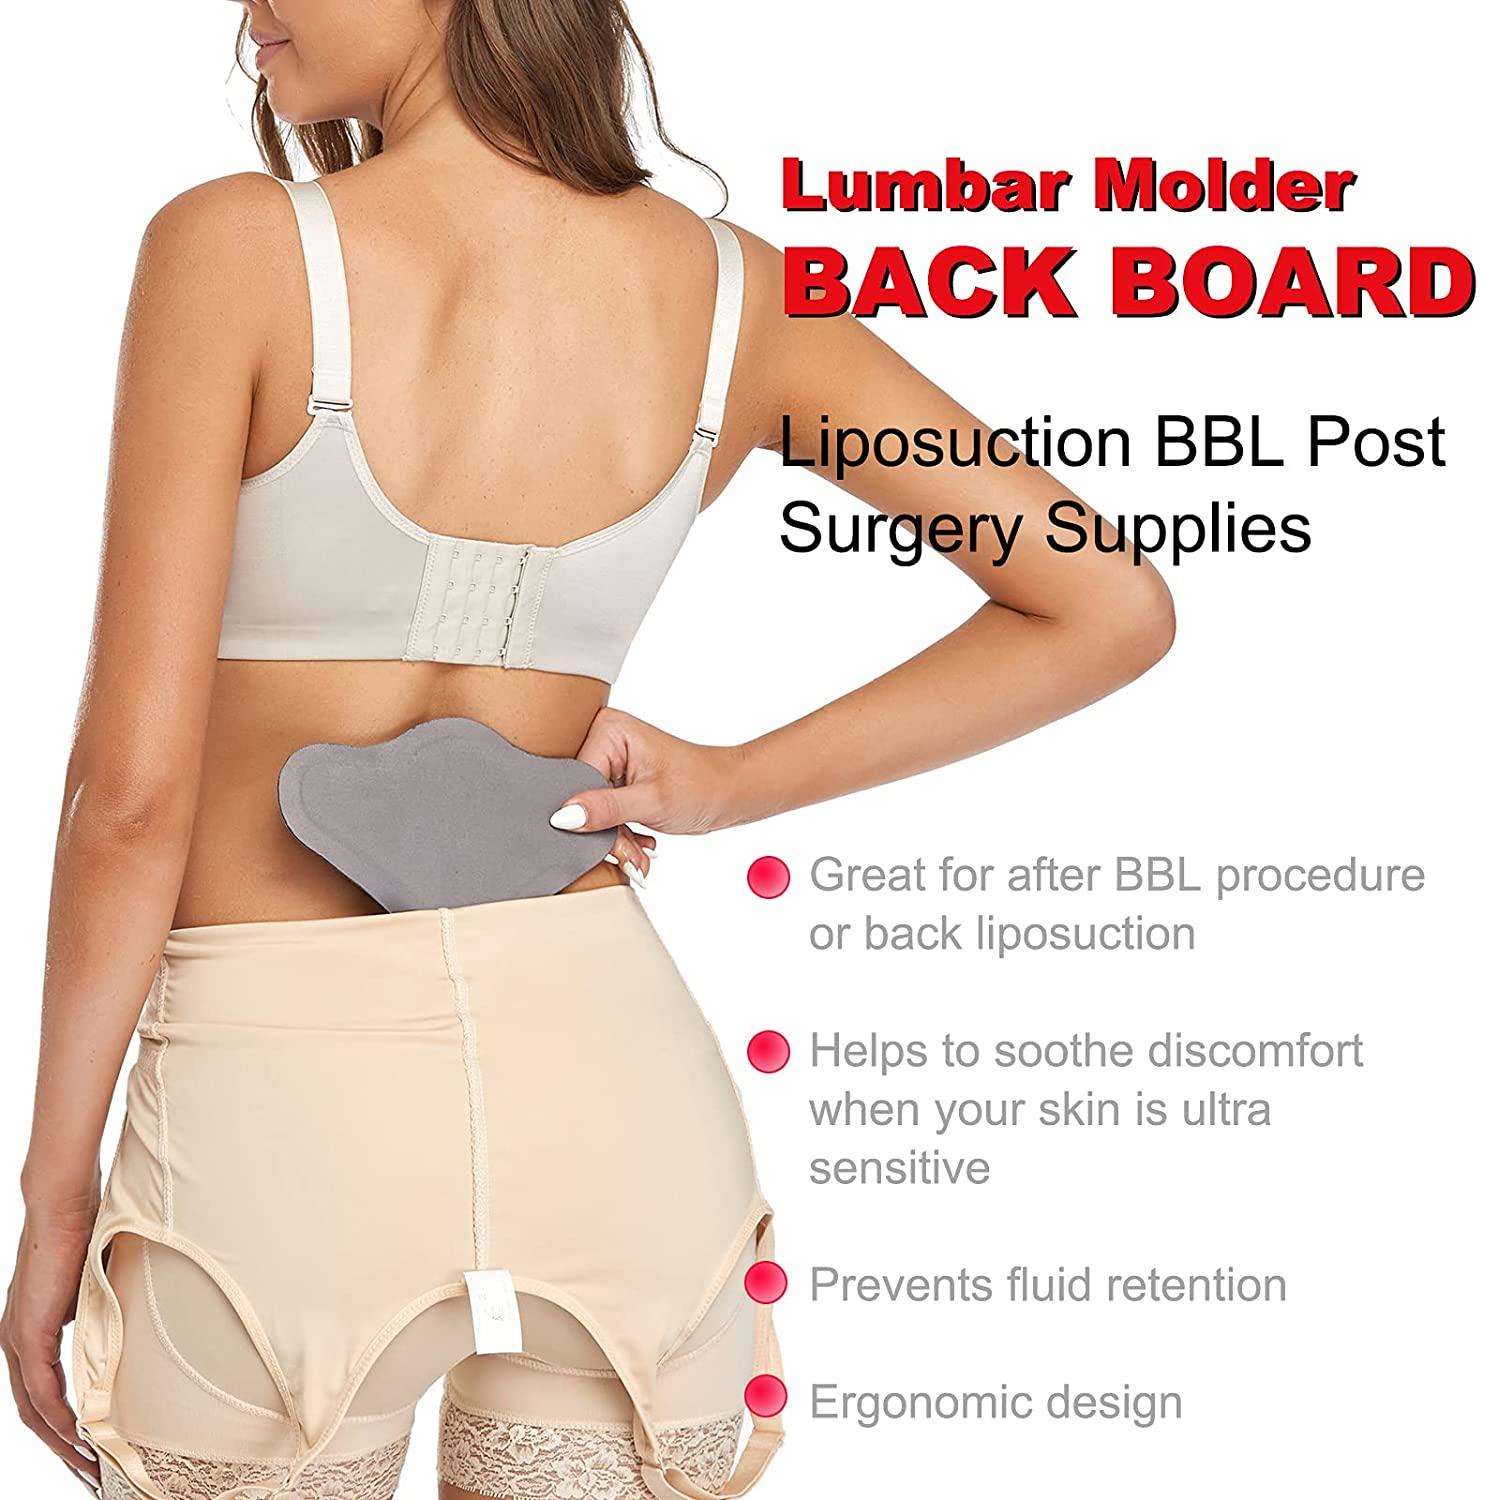 SHAPERX Lumbar Molder Liposuction Comfortable Lumbar Support